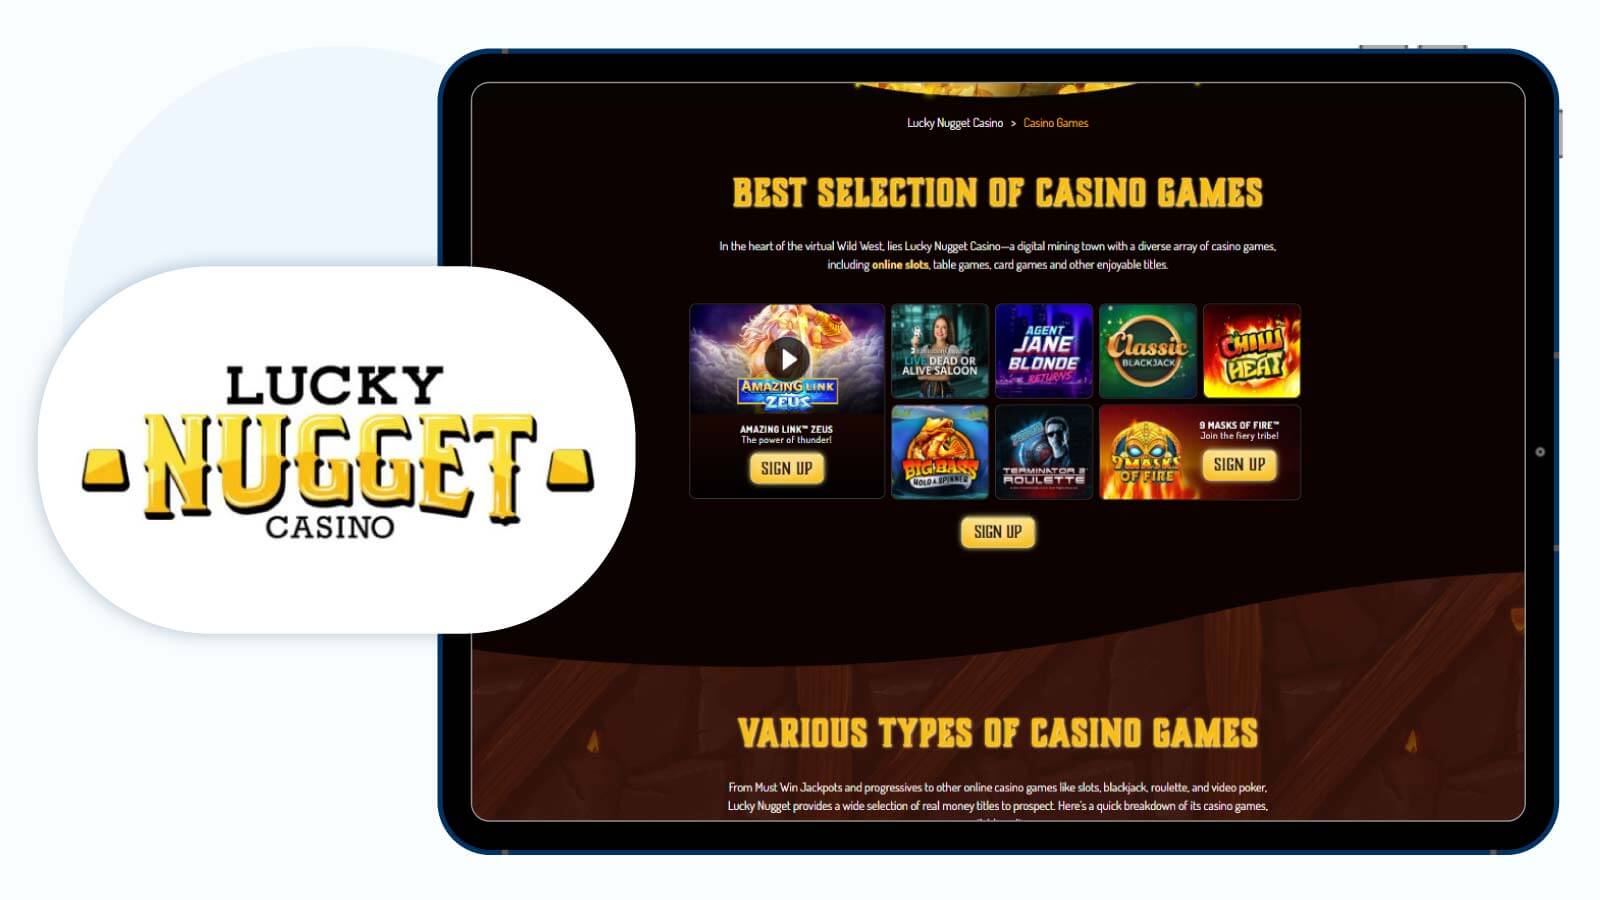 Lucky-Nugget-Casino-Lowest-Minimum-Deposit-Microgaming-Casino-Site